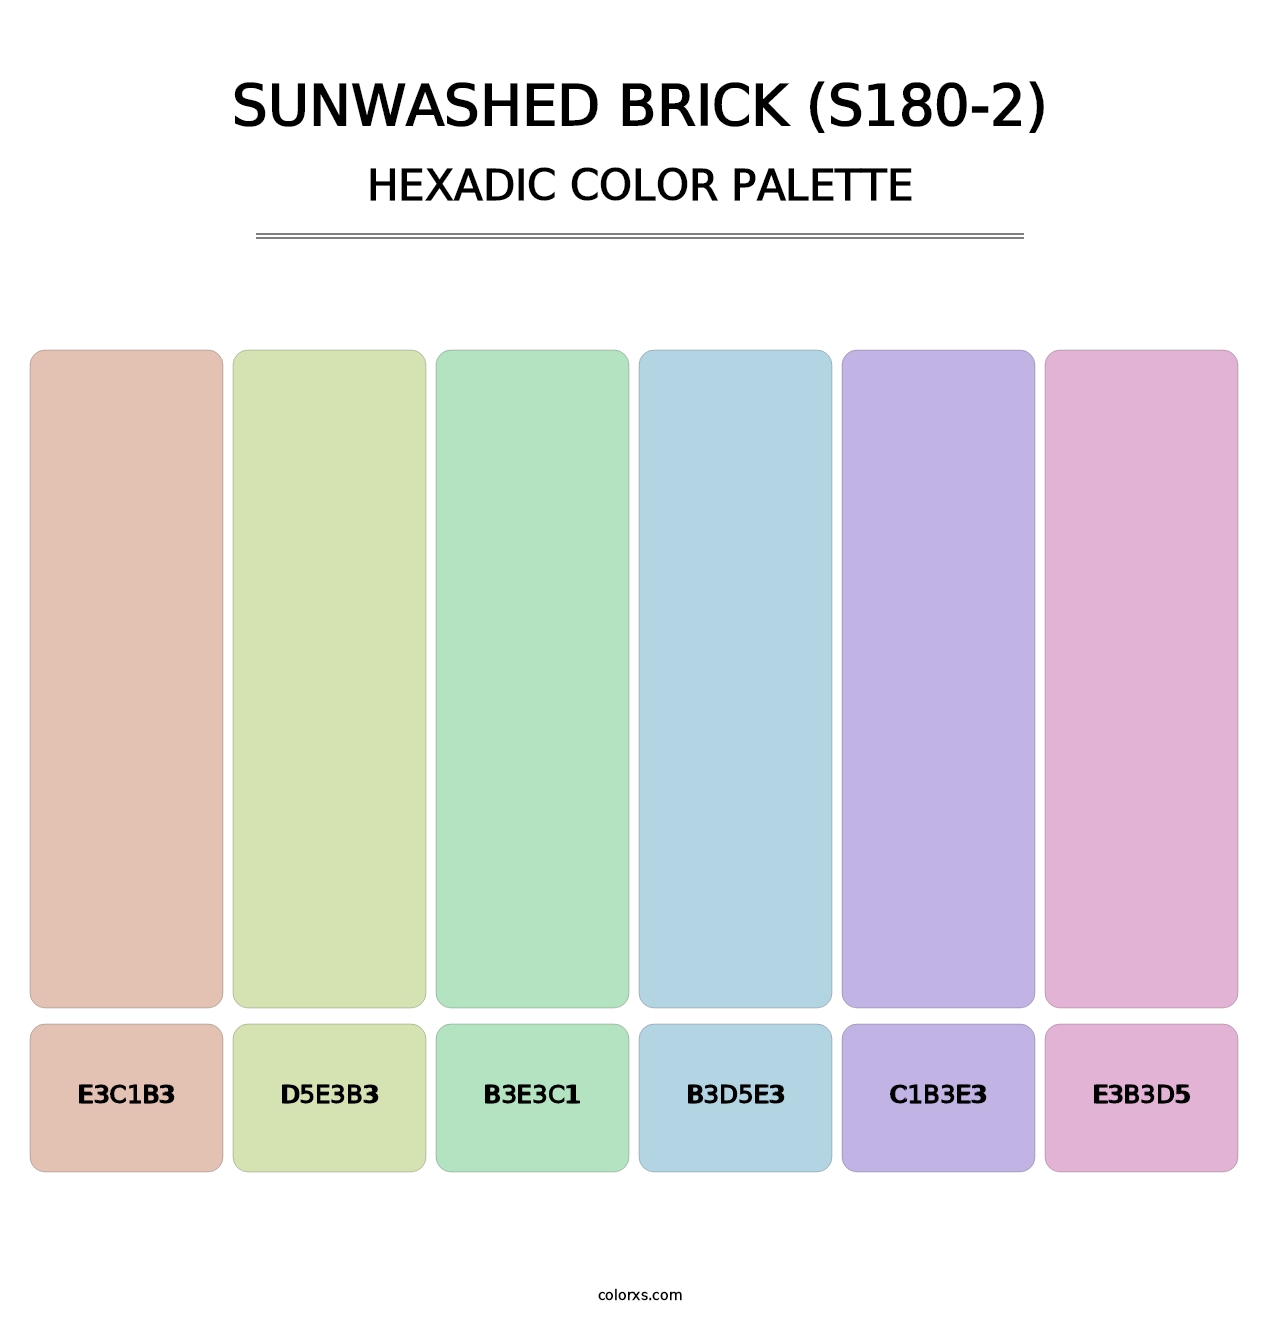 Sunwashed Brick (S180-2) - Hexadic Color Palette